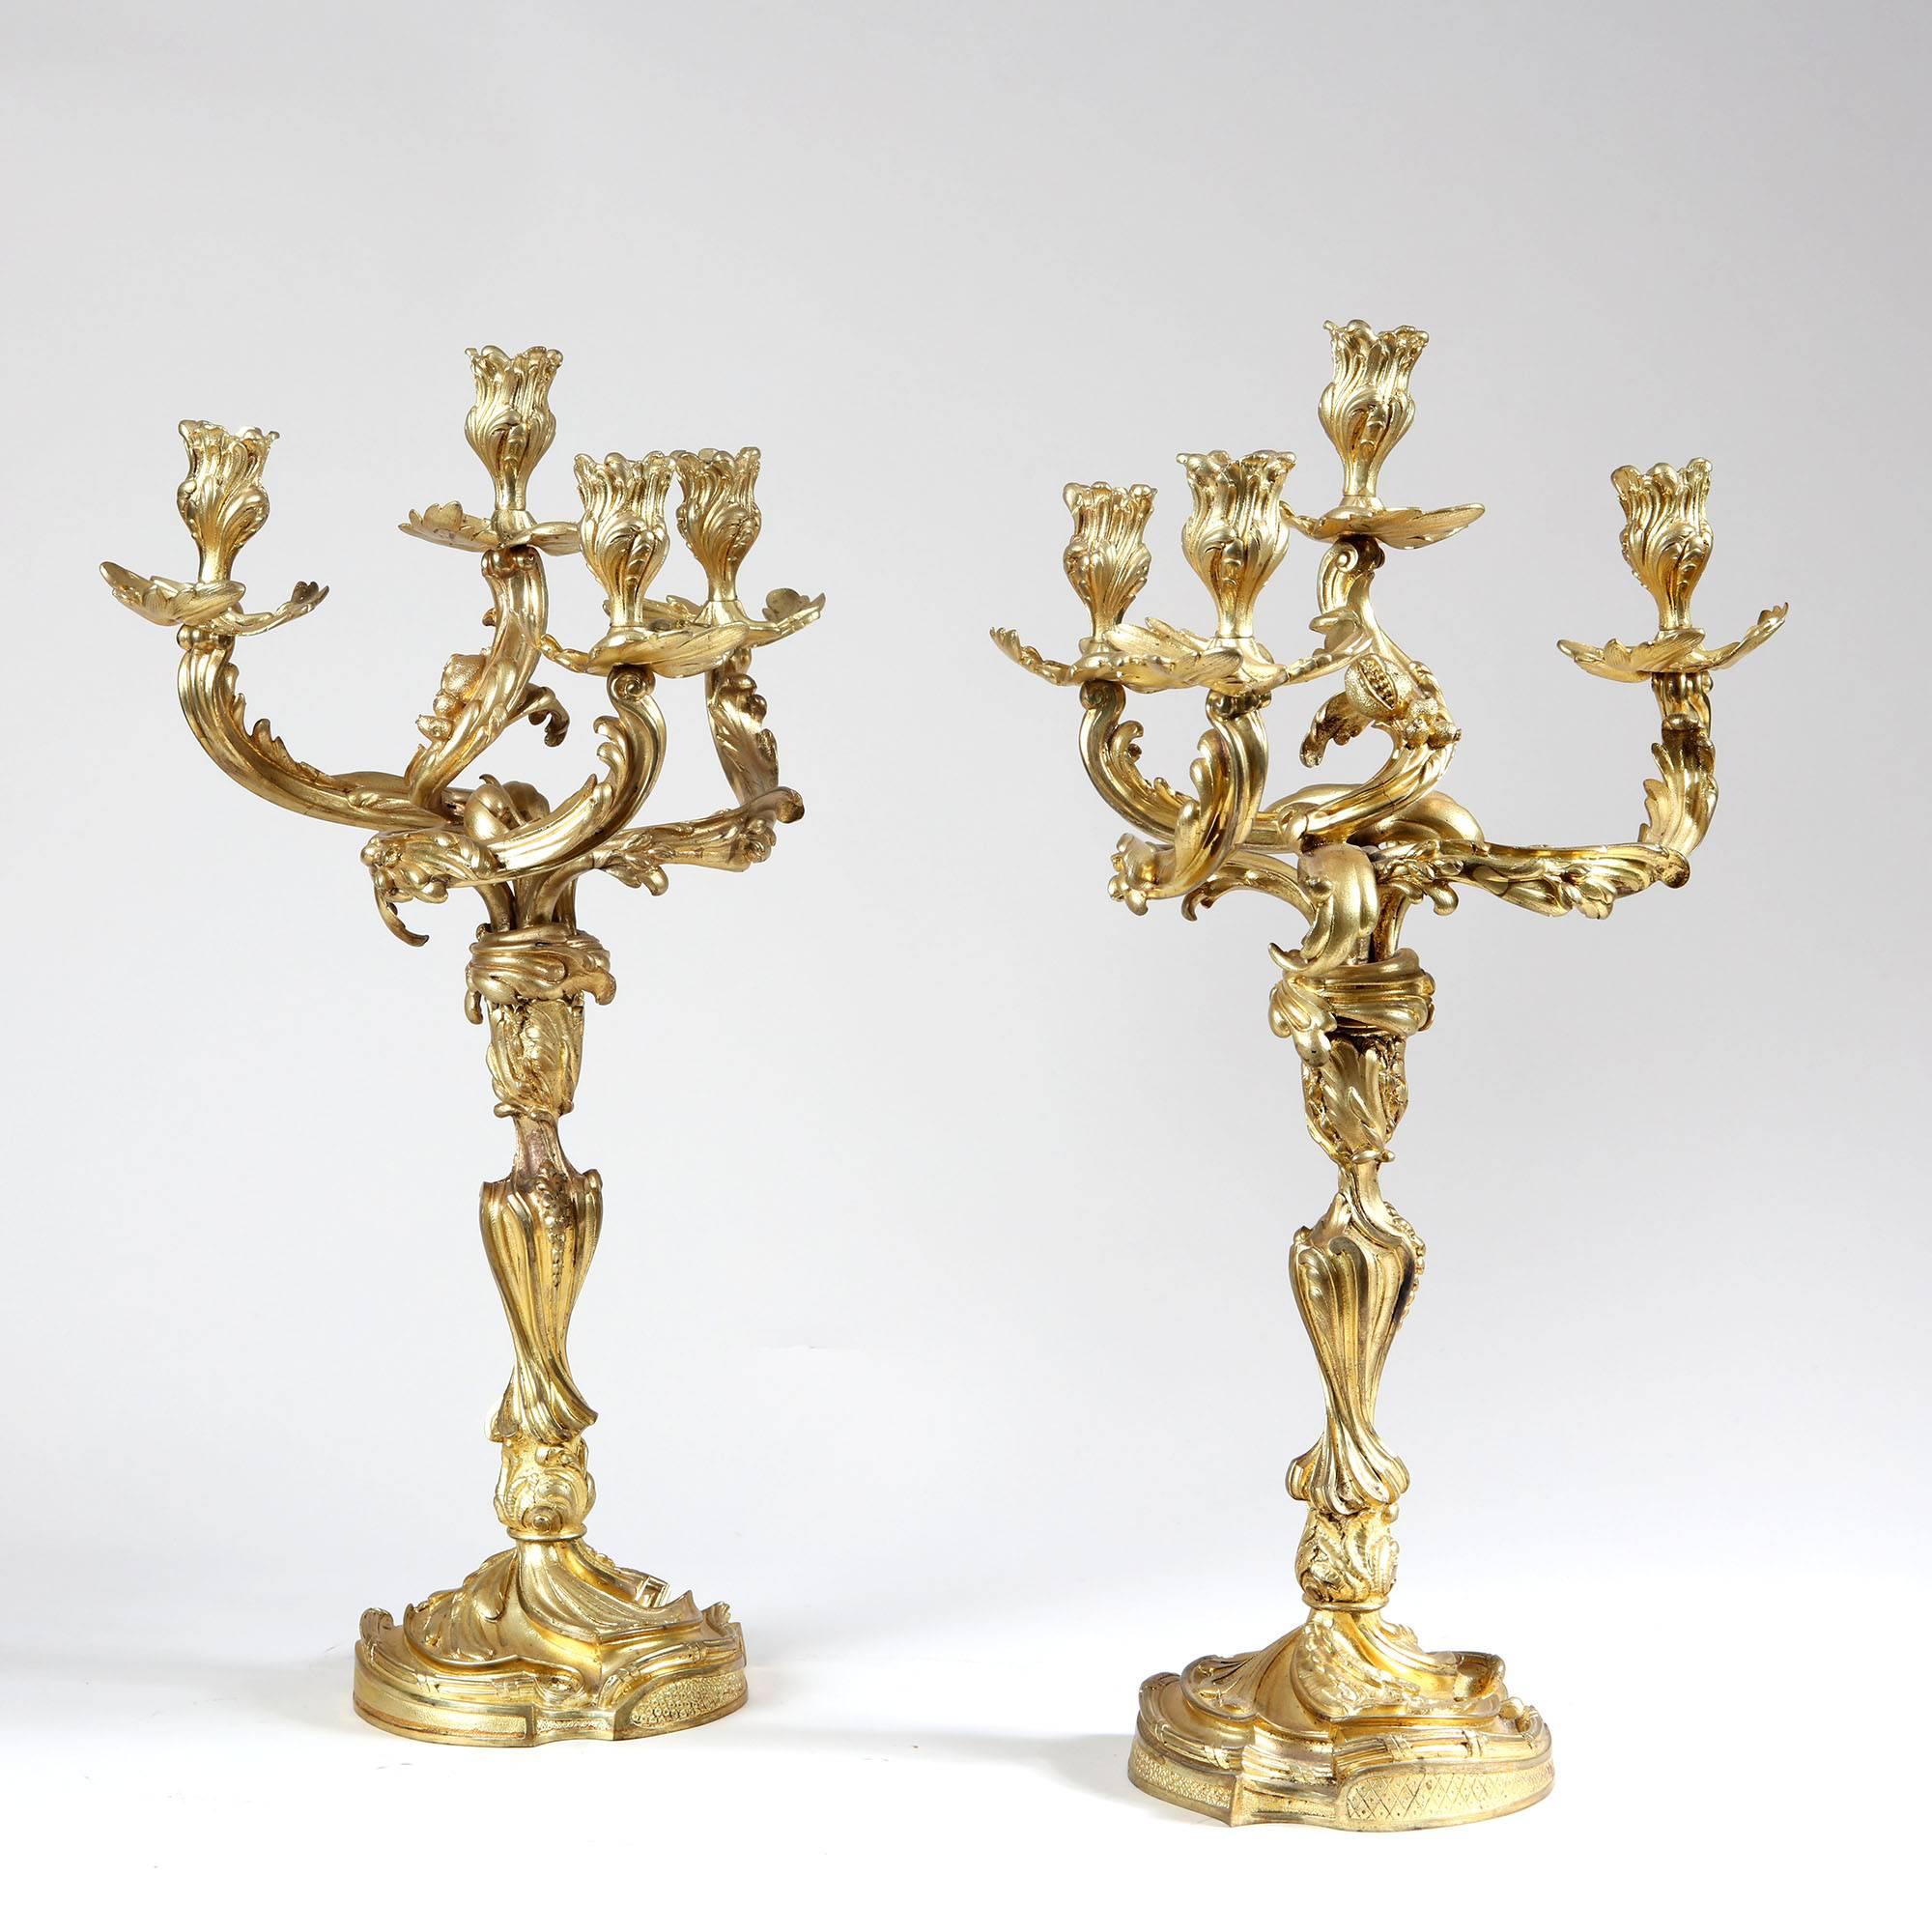 A pair of Louis XV style four-light ormolu candelabra (Electrified)

France, circa 1900 

Measures: Height 57cm 
Diameter 35cm.